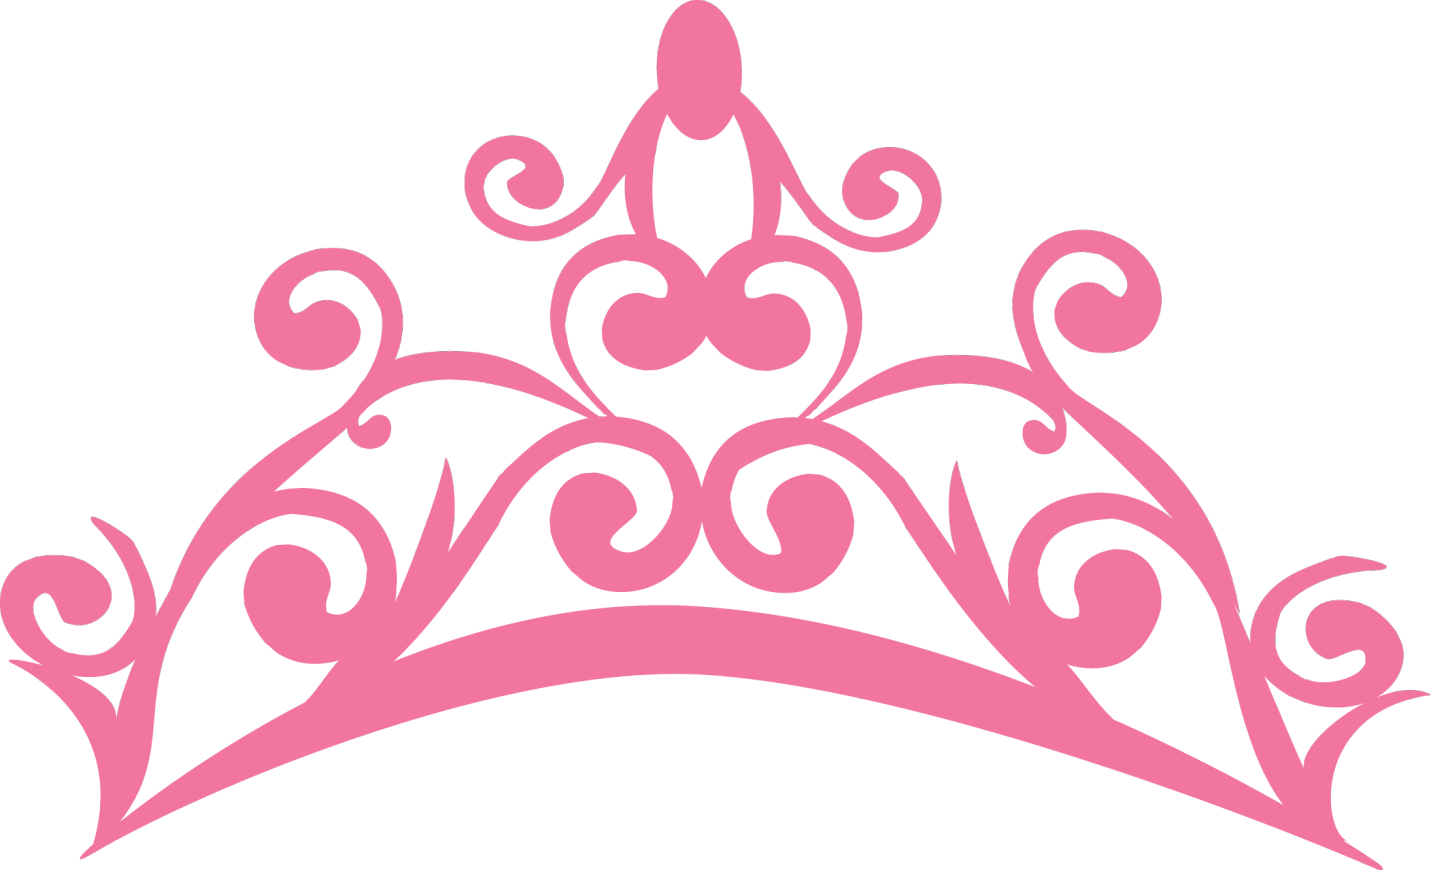 Princess Crown Wallpapers